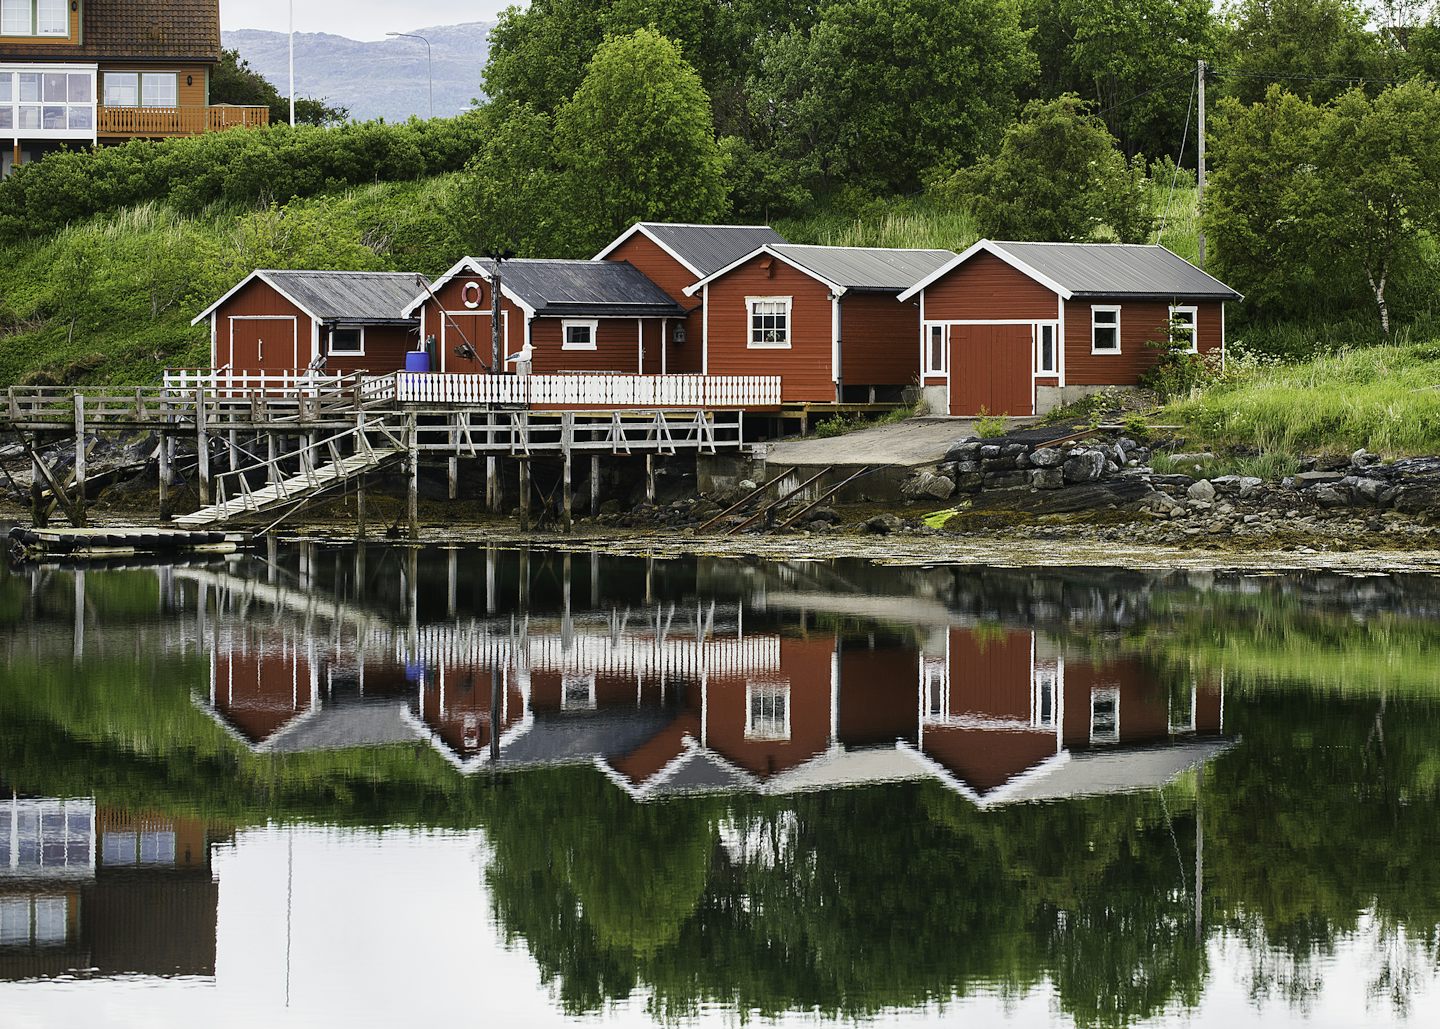 One of many typical sights in Brønnøysund.